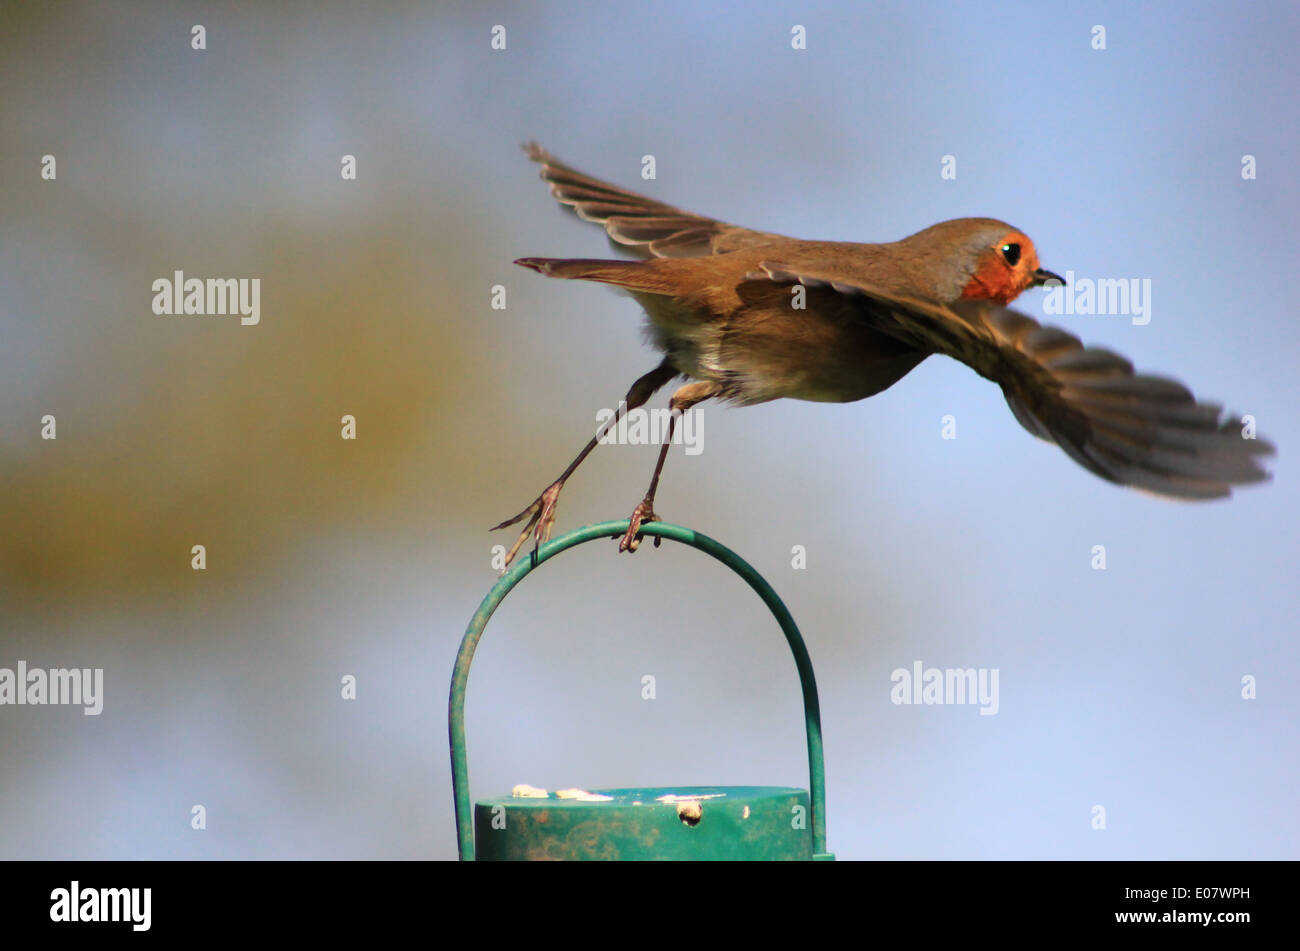 Robin flying from bird feeder Stock Photo